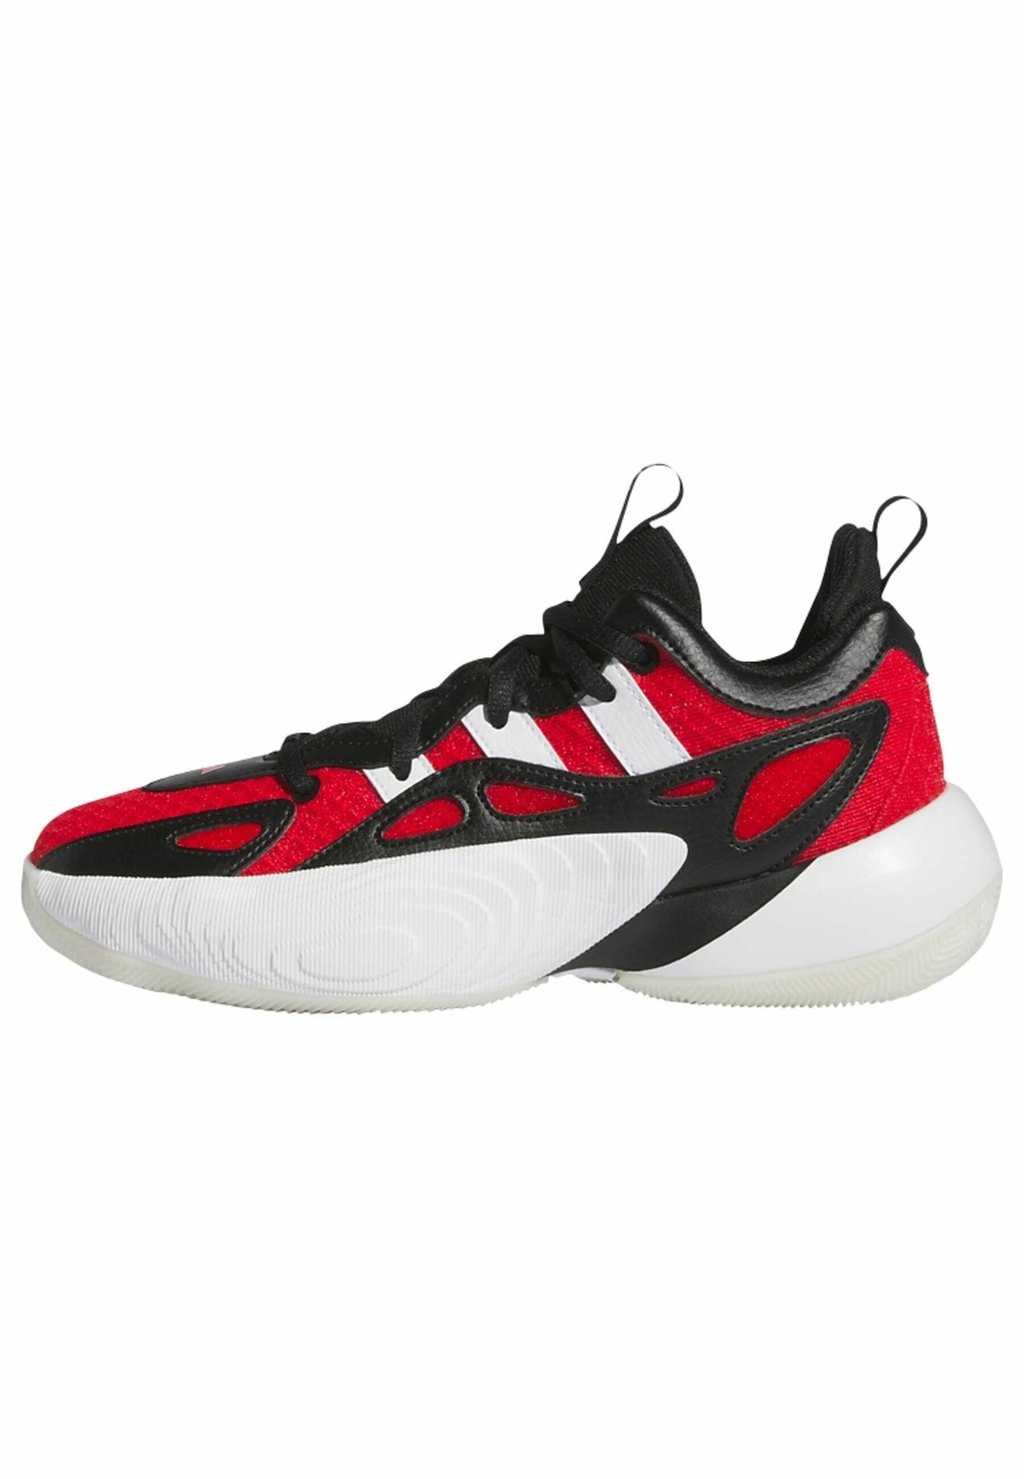 Баскетбольные кроссовки TRAE UNLIMITED adidas Performance, цвет vivid red cloud white core black шорты he2014 adidas g3ssho vivid red 152